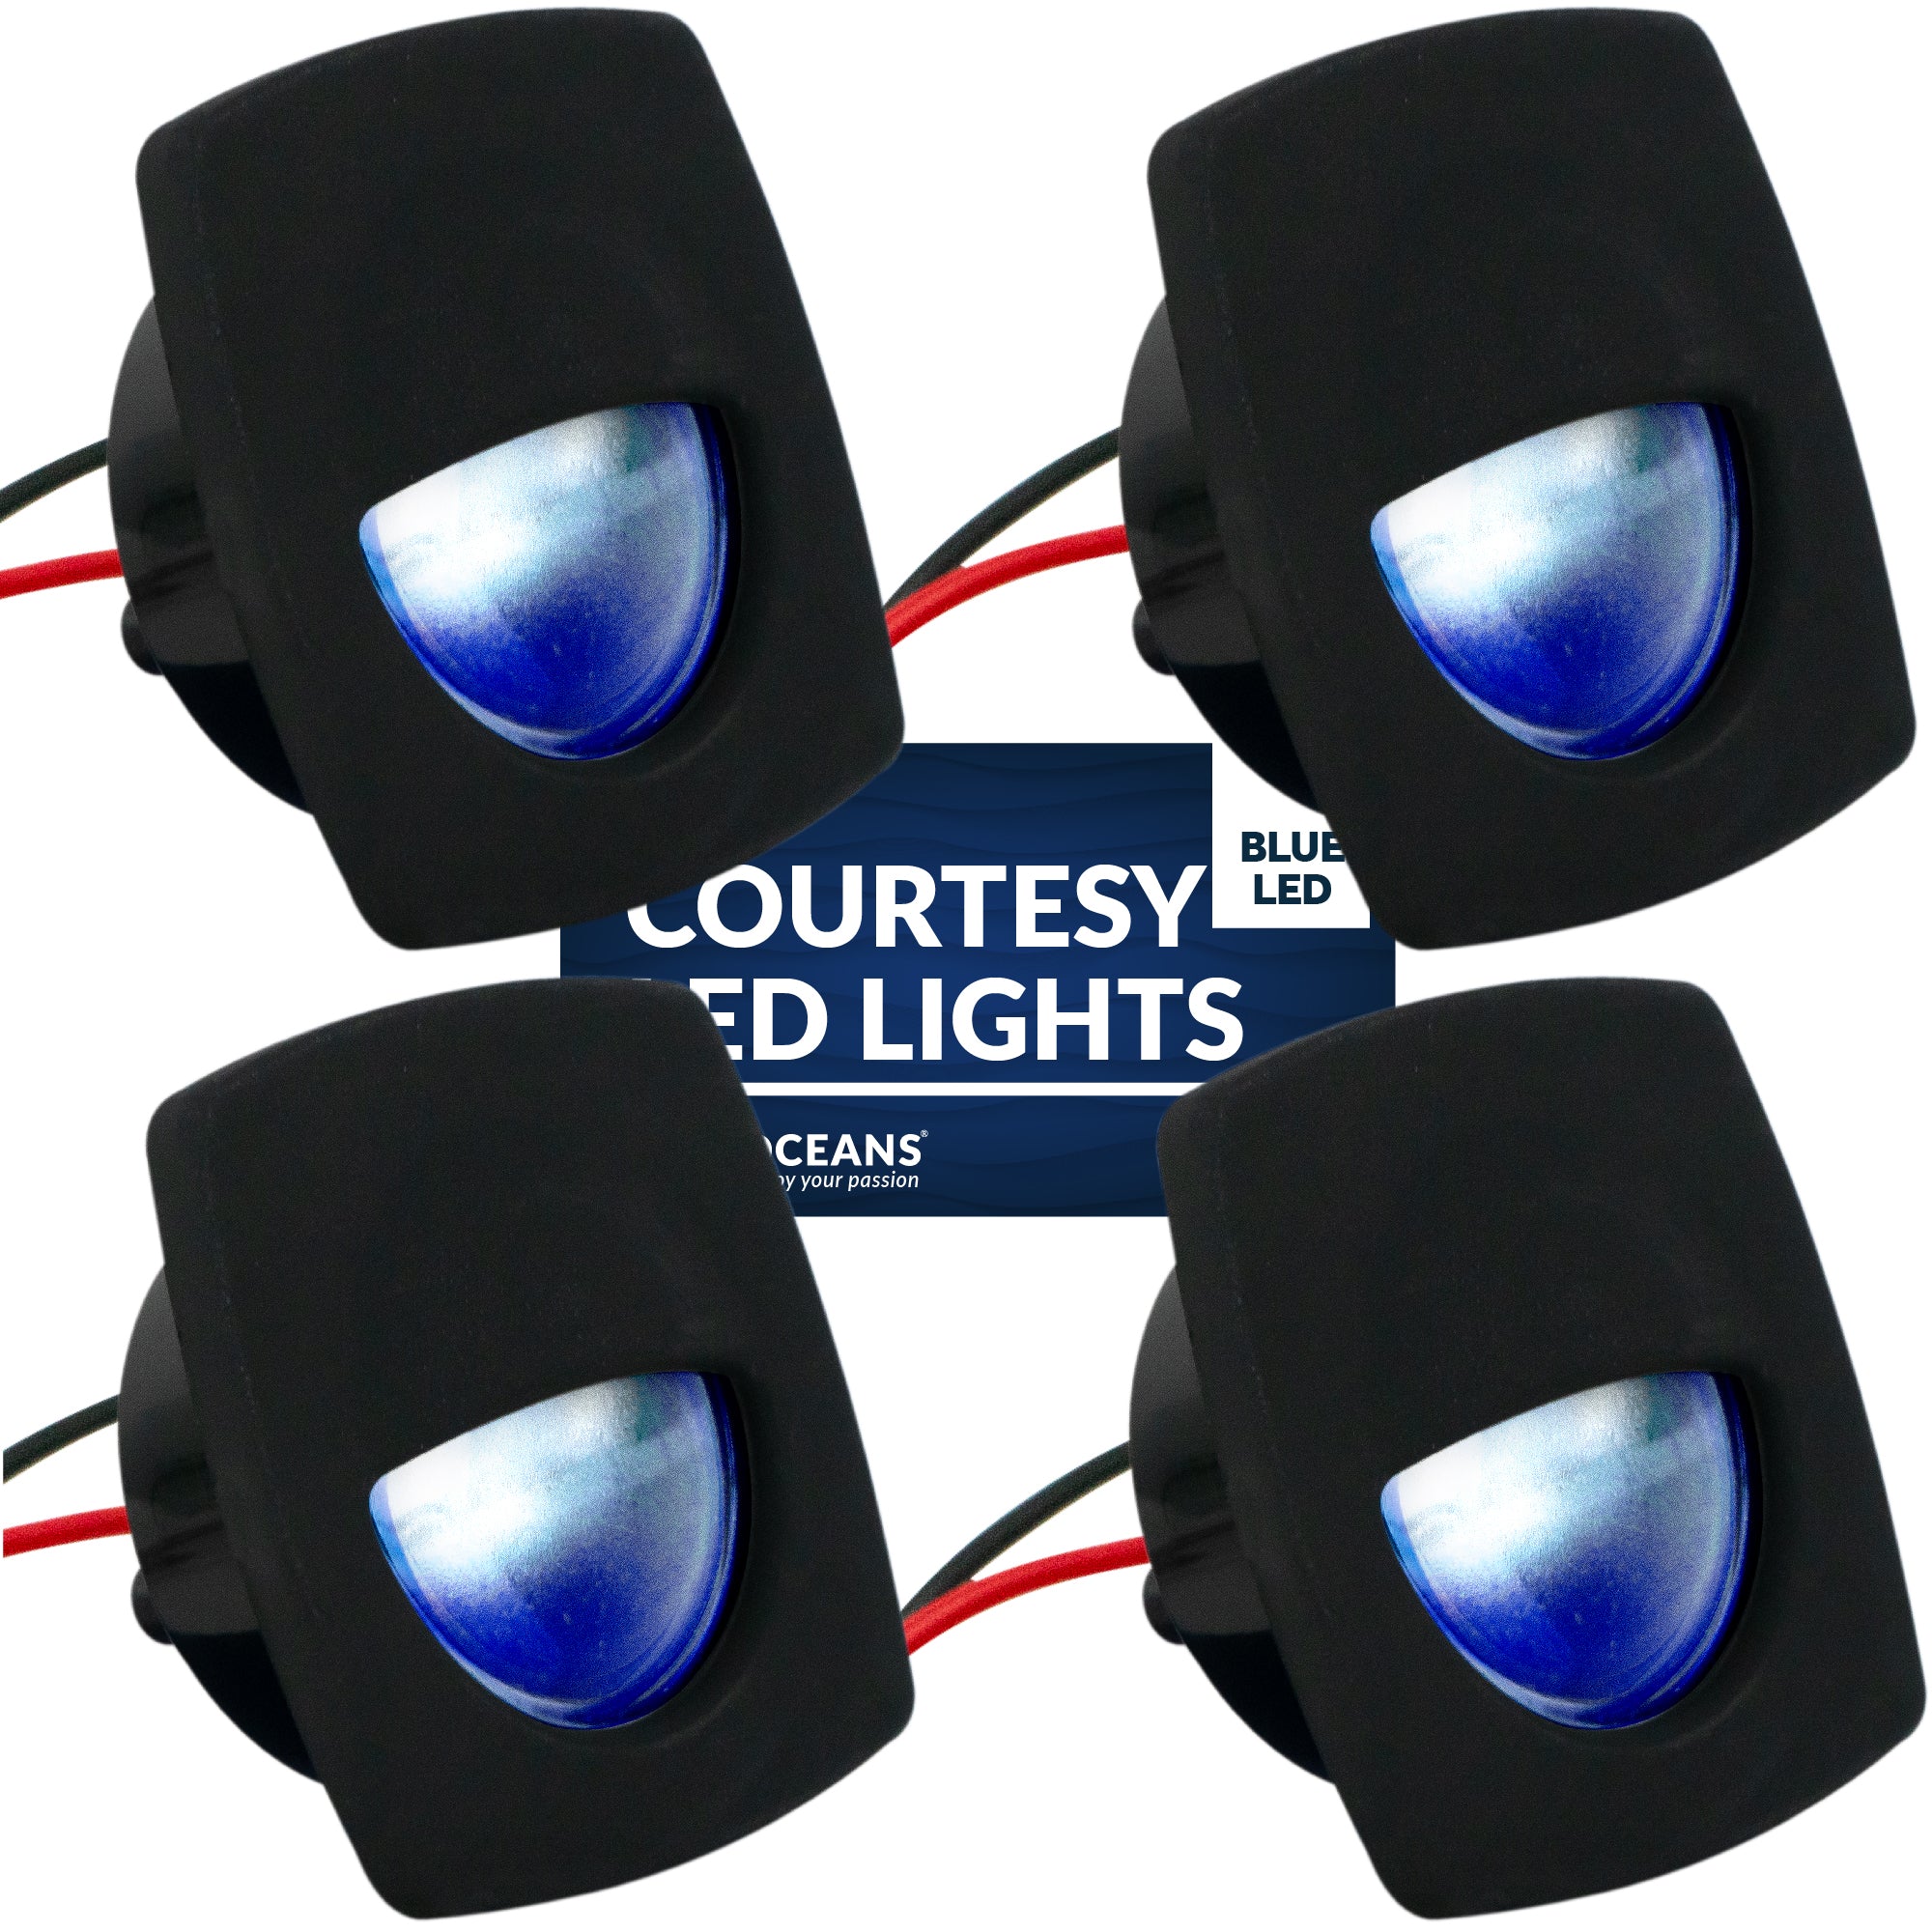 LED Courtesy Companion Way Light, Square, Blue light, 4-pack - FO4002-M4